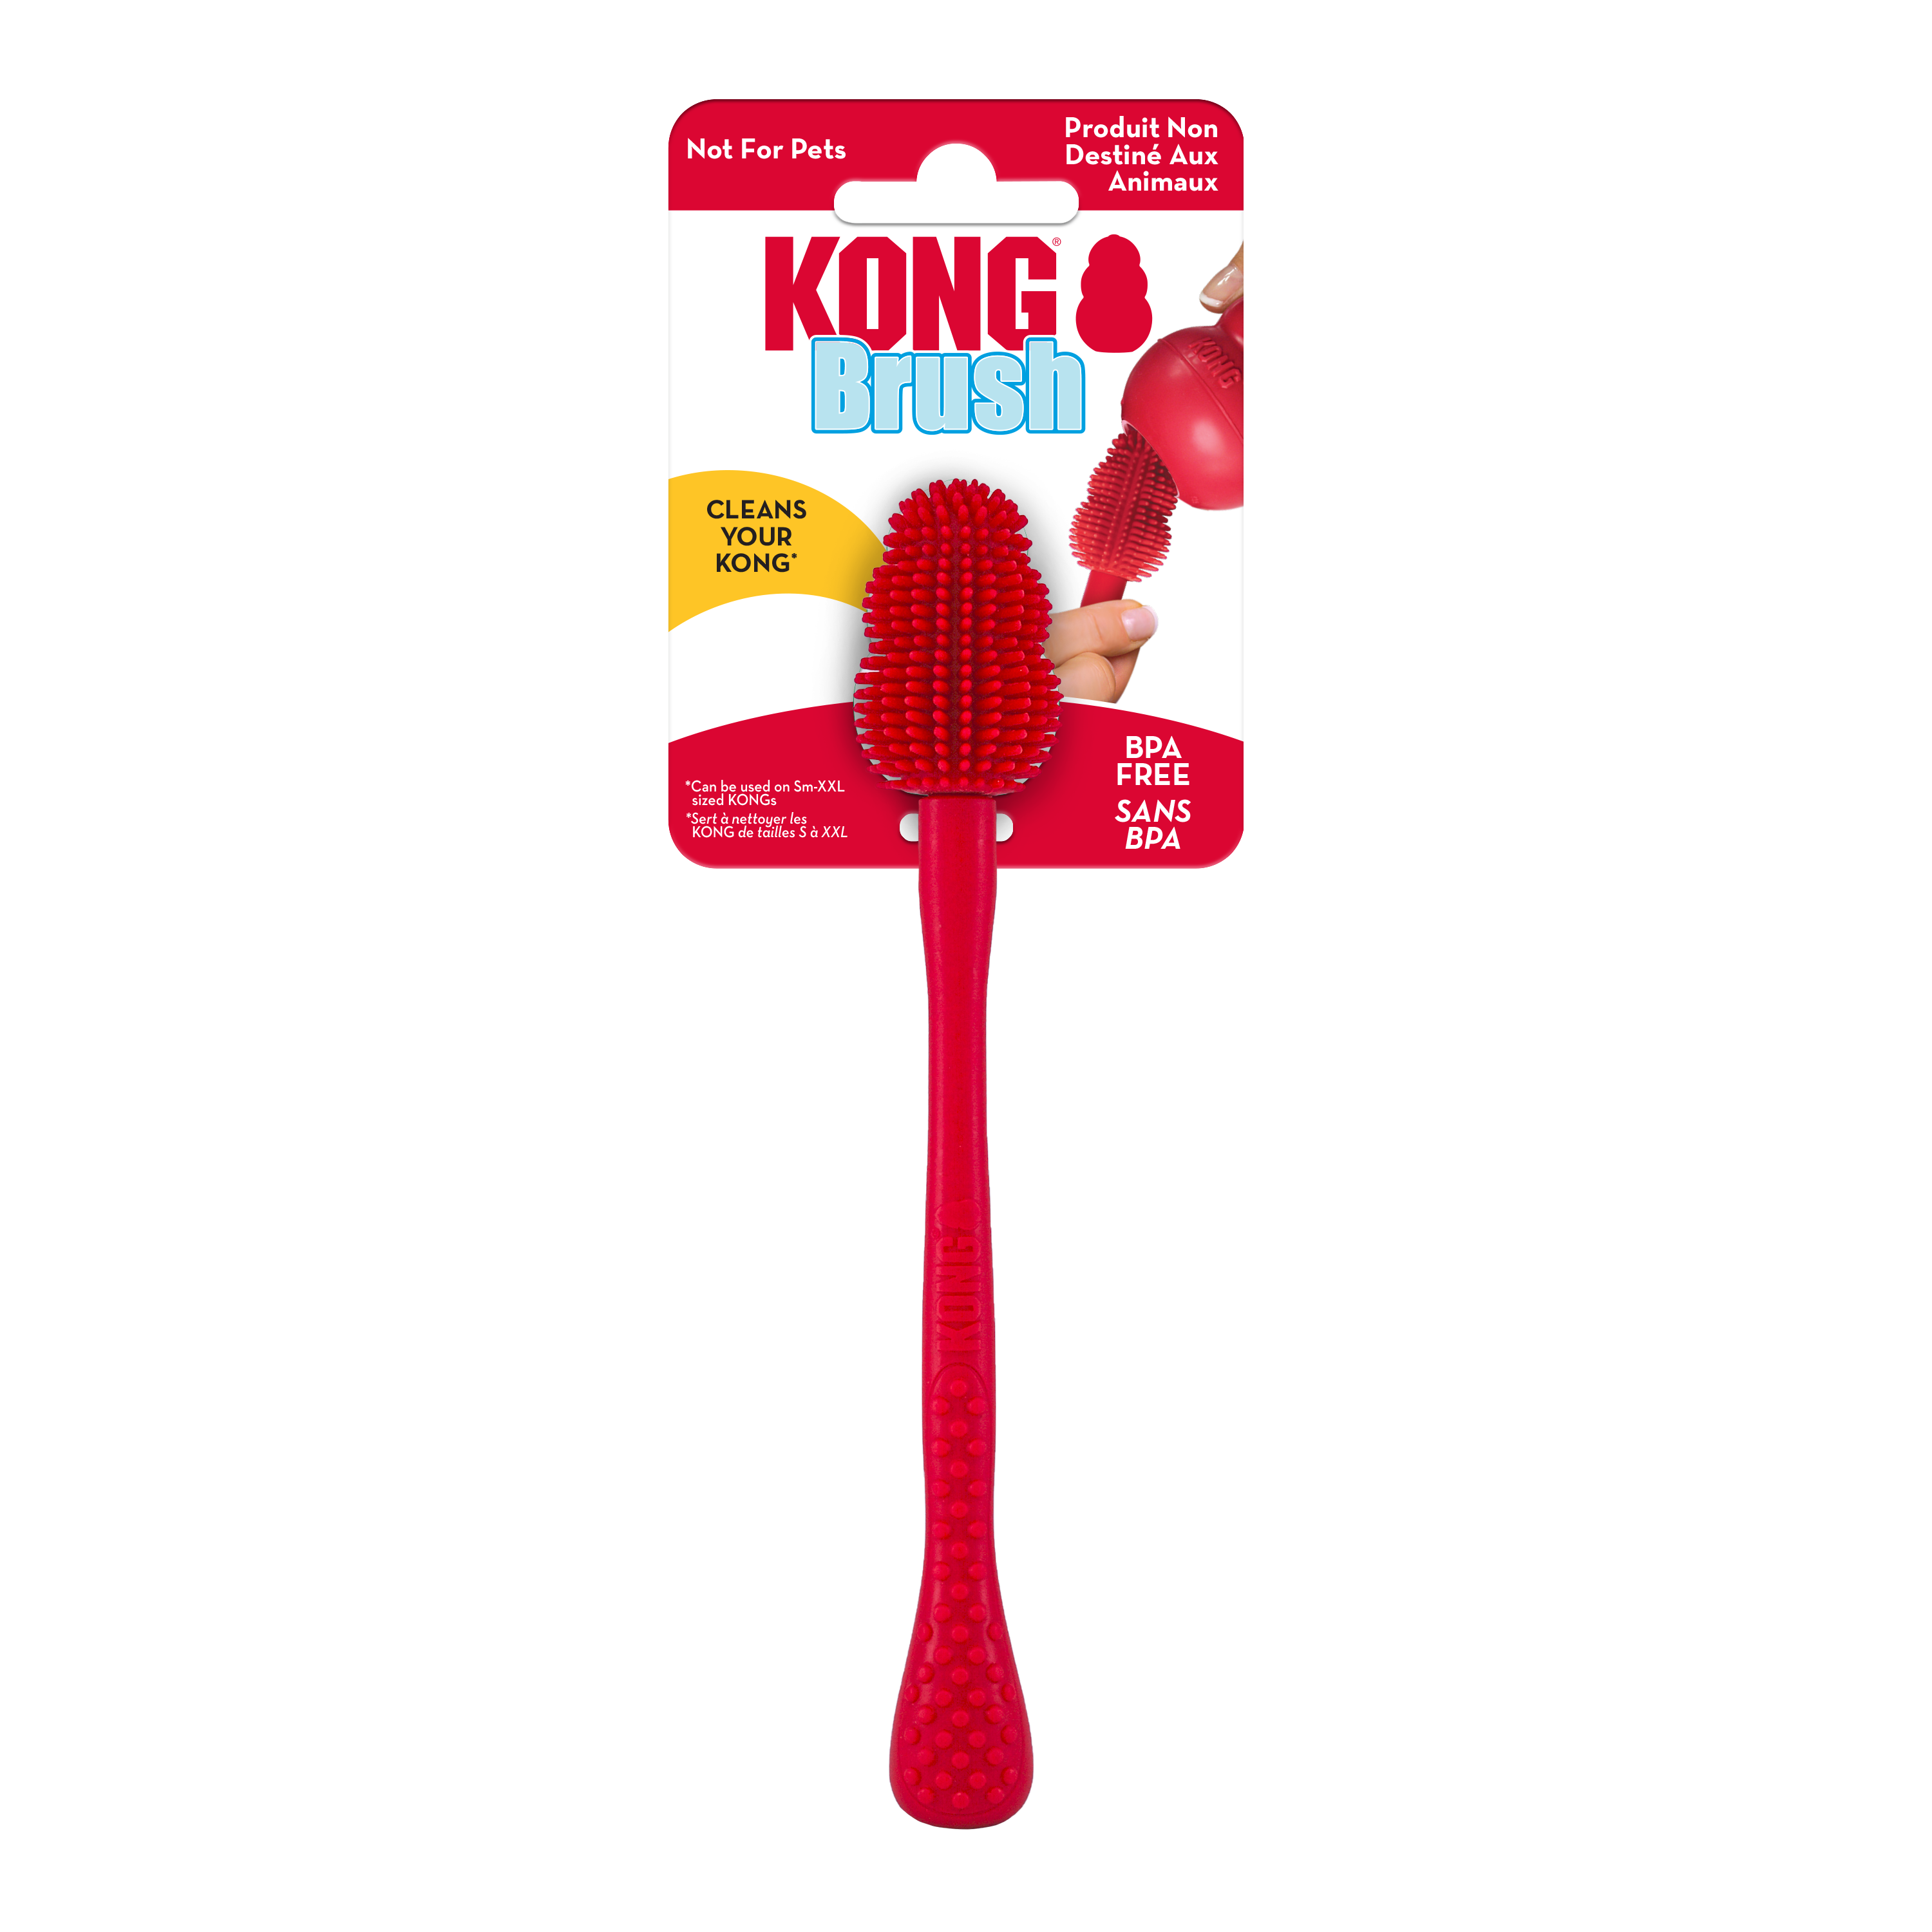 KONG Cleaning Brush onpack imagen de producto